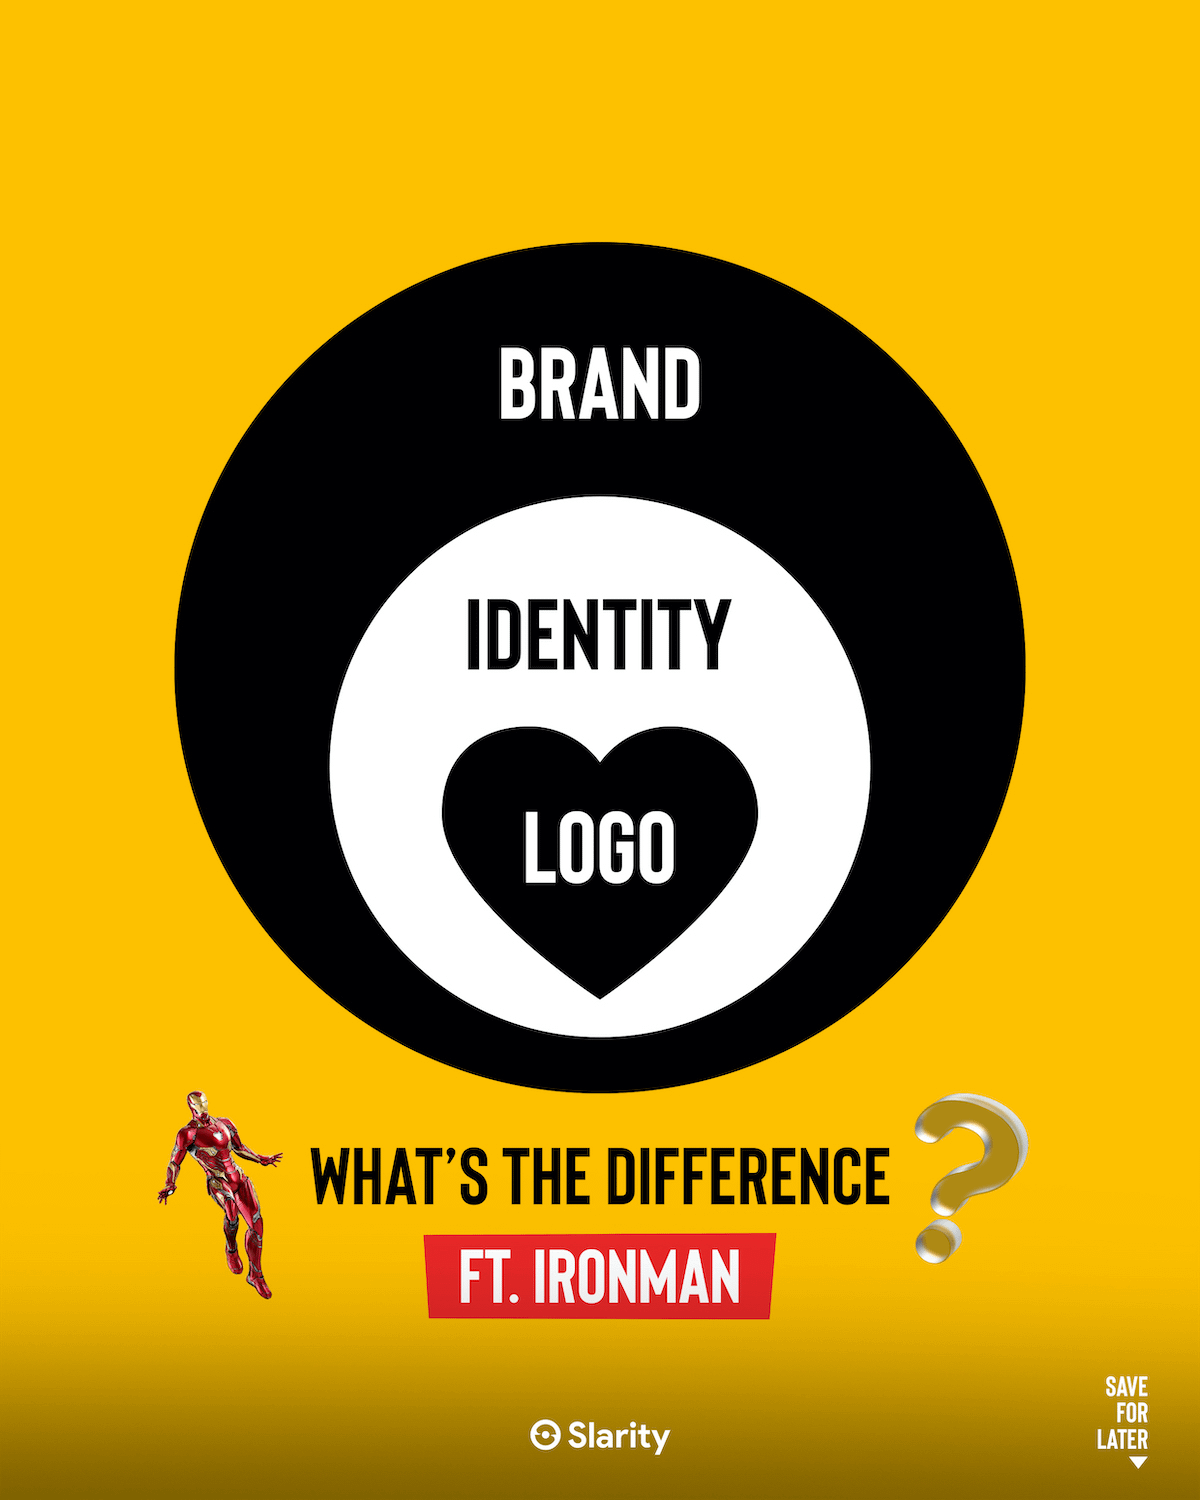 Branding – Ft. Ironman